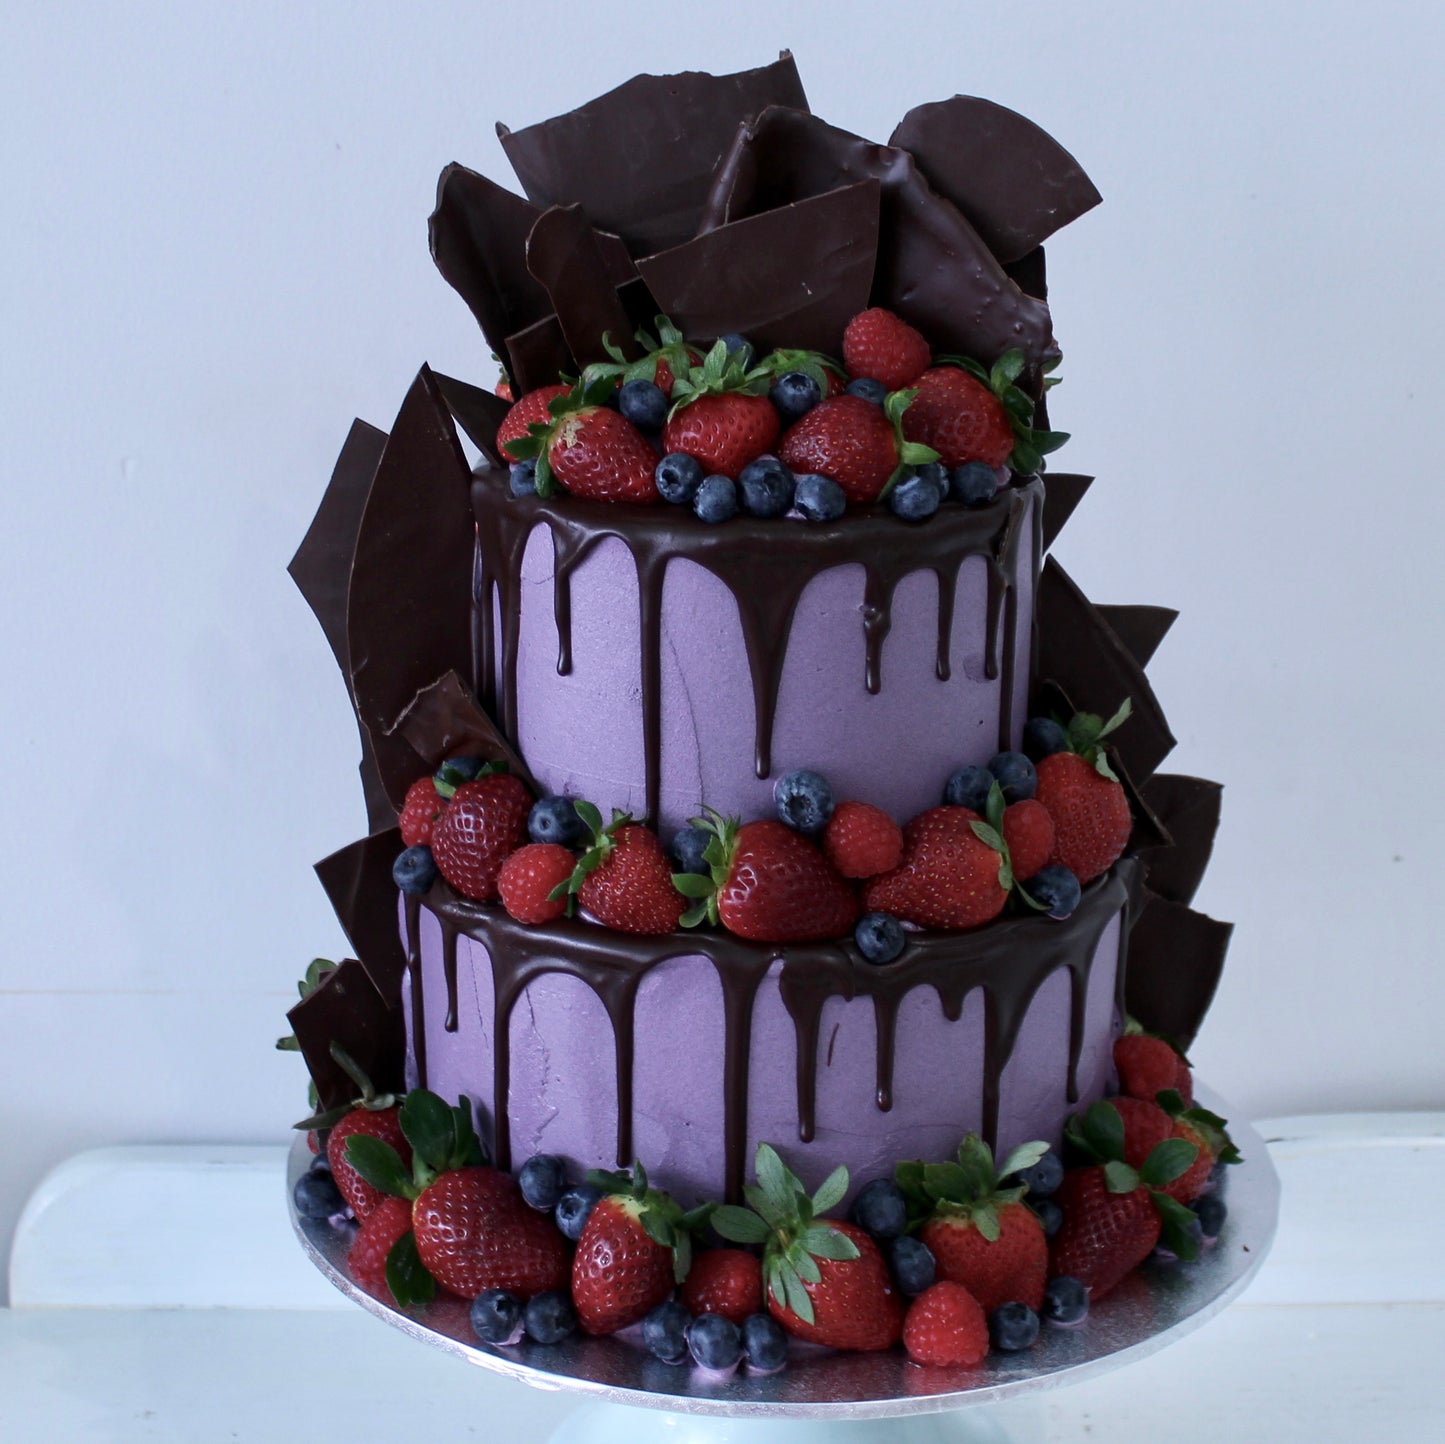 2 Tier Chocolate & Berry Cake 2 Toned